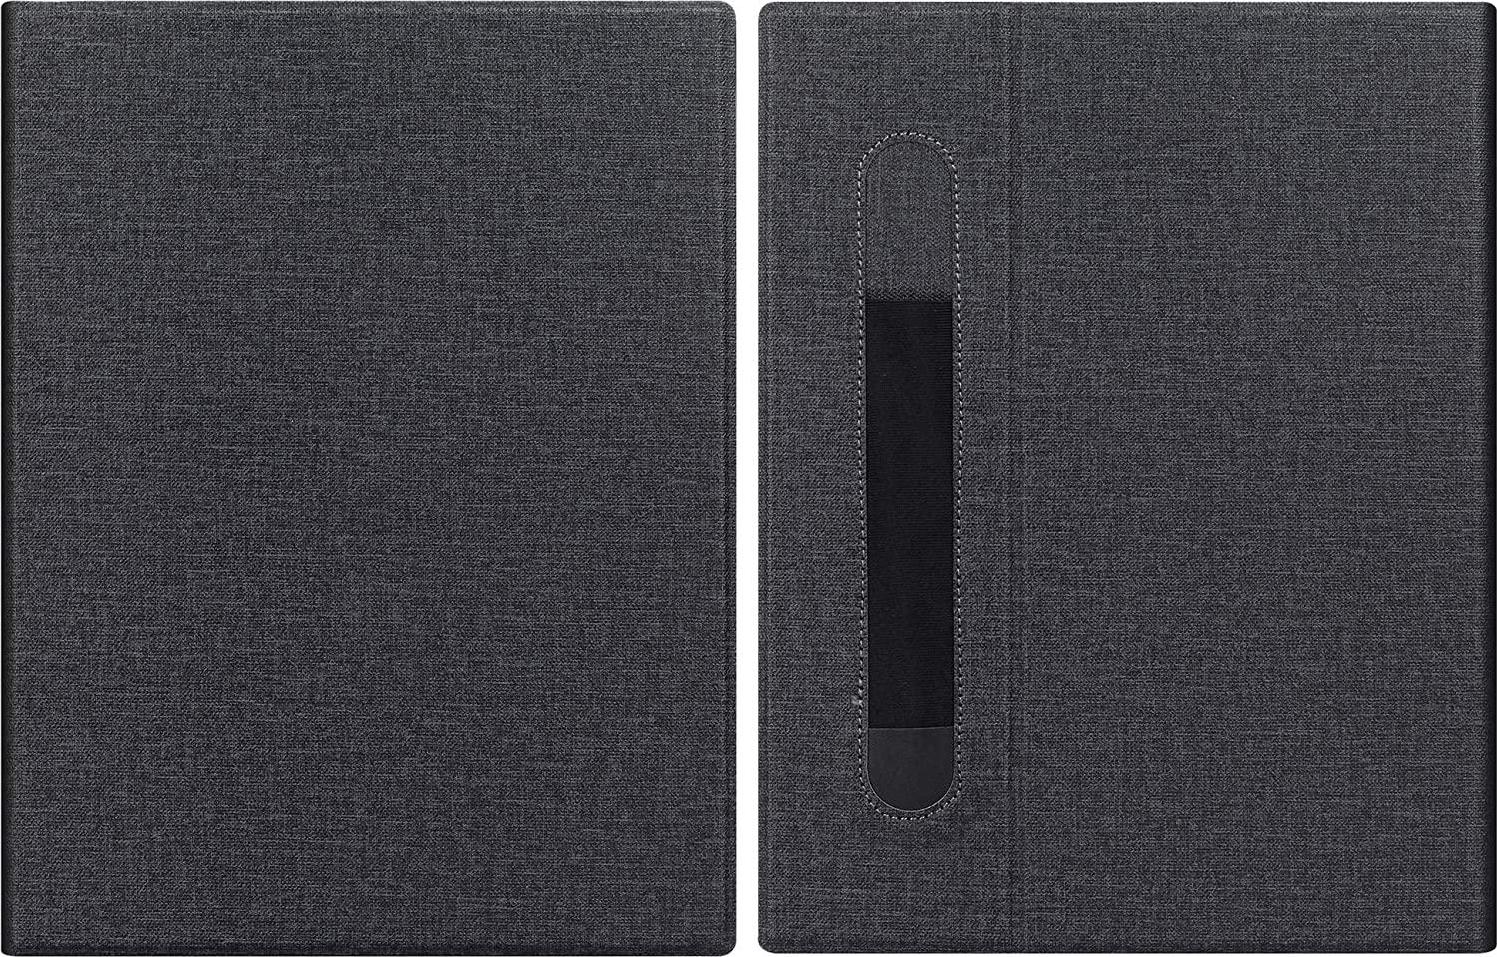 KuRoKo, KuRoKo Slim Lightweight Book Folios Case Cover for Remarkable 2 10.3 inch Digital Paper(2020 Released)